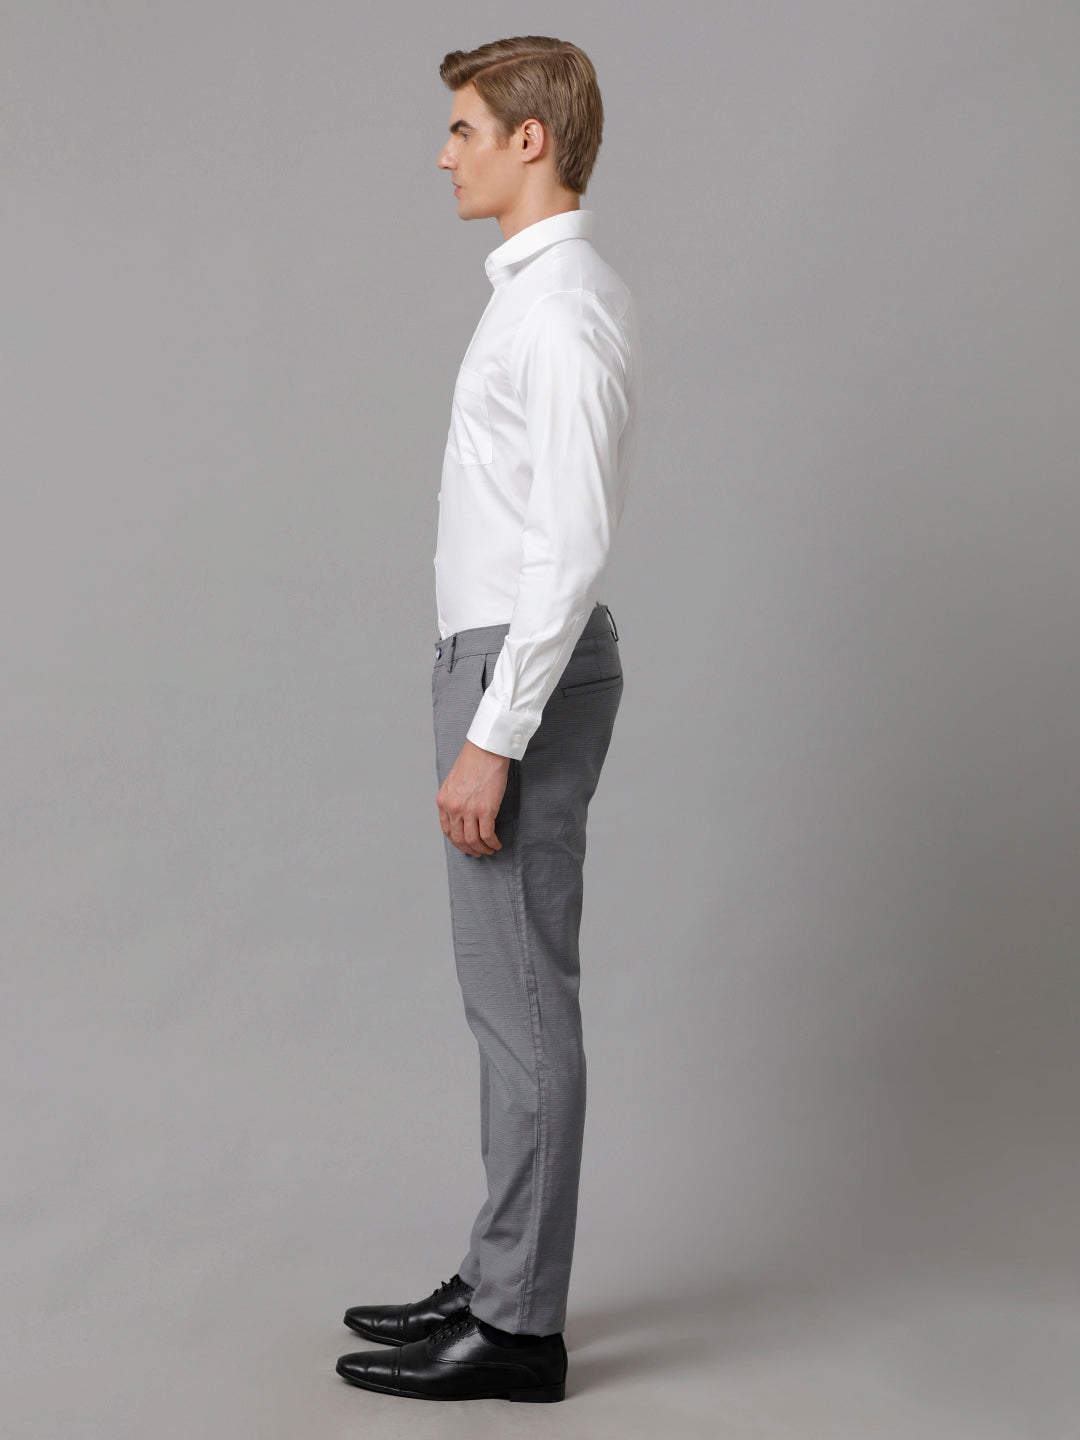 Aldeno Men Solid Formal White Shirt For men